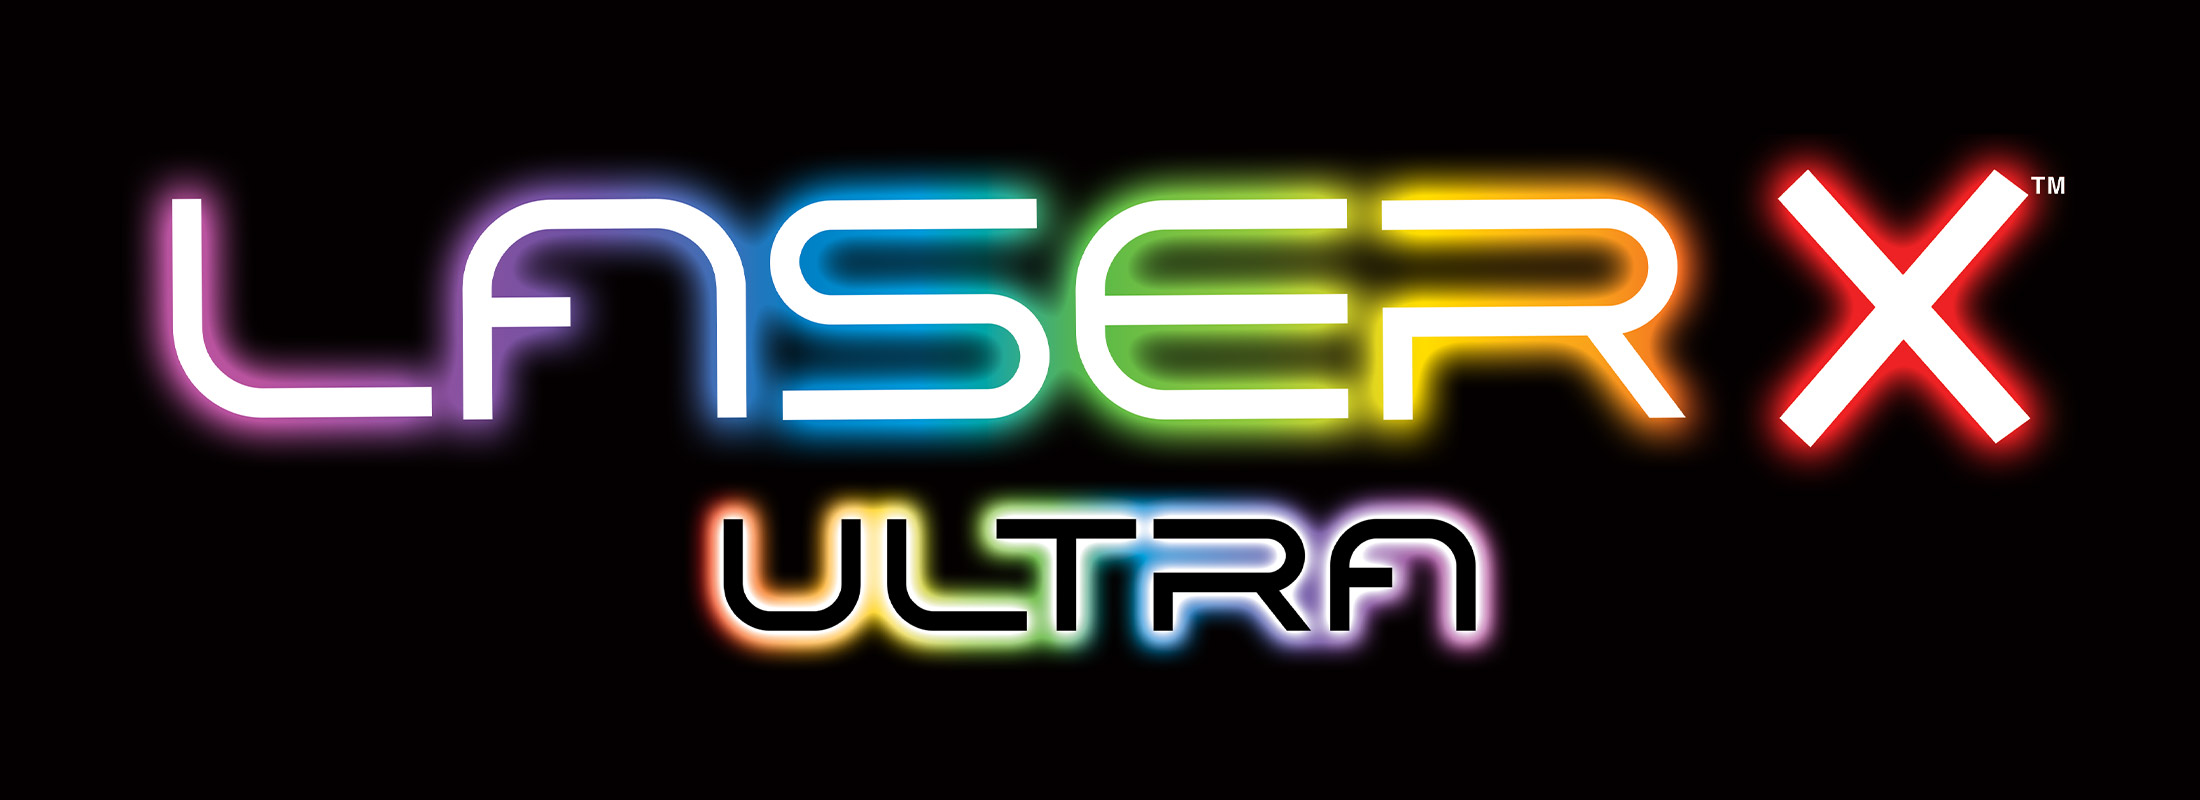 Laser X Ultra - Hunter Leisure